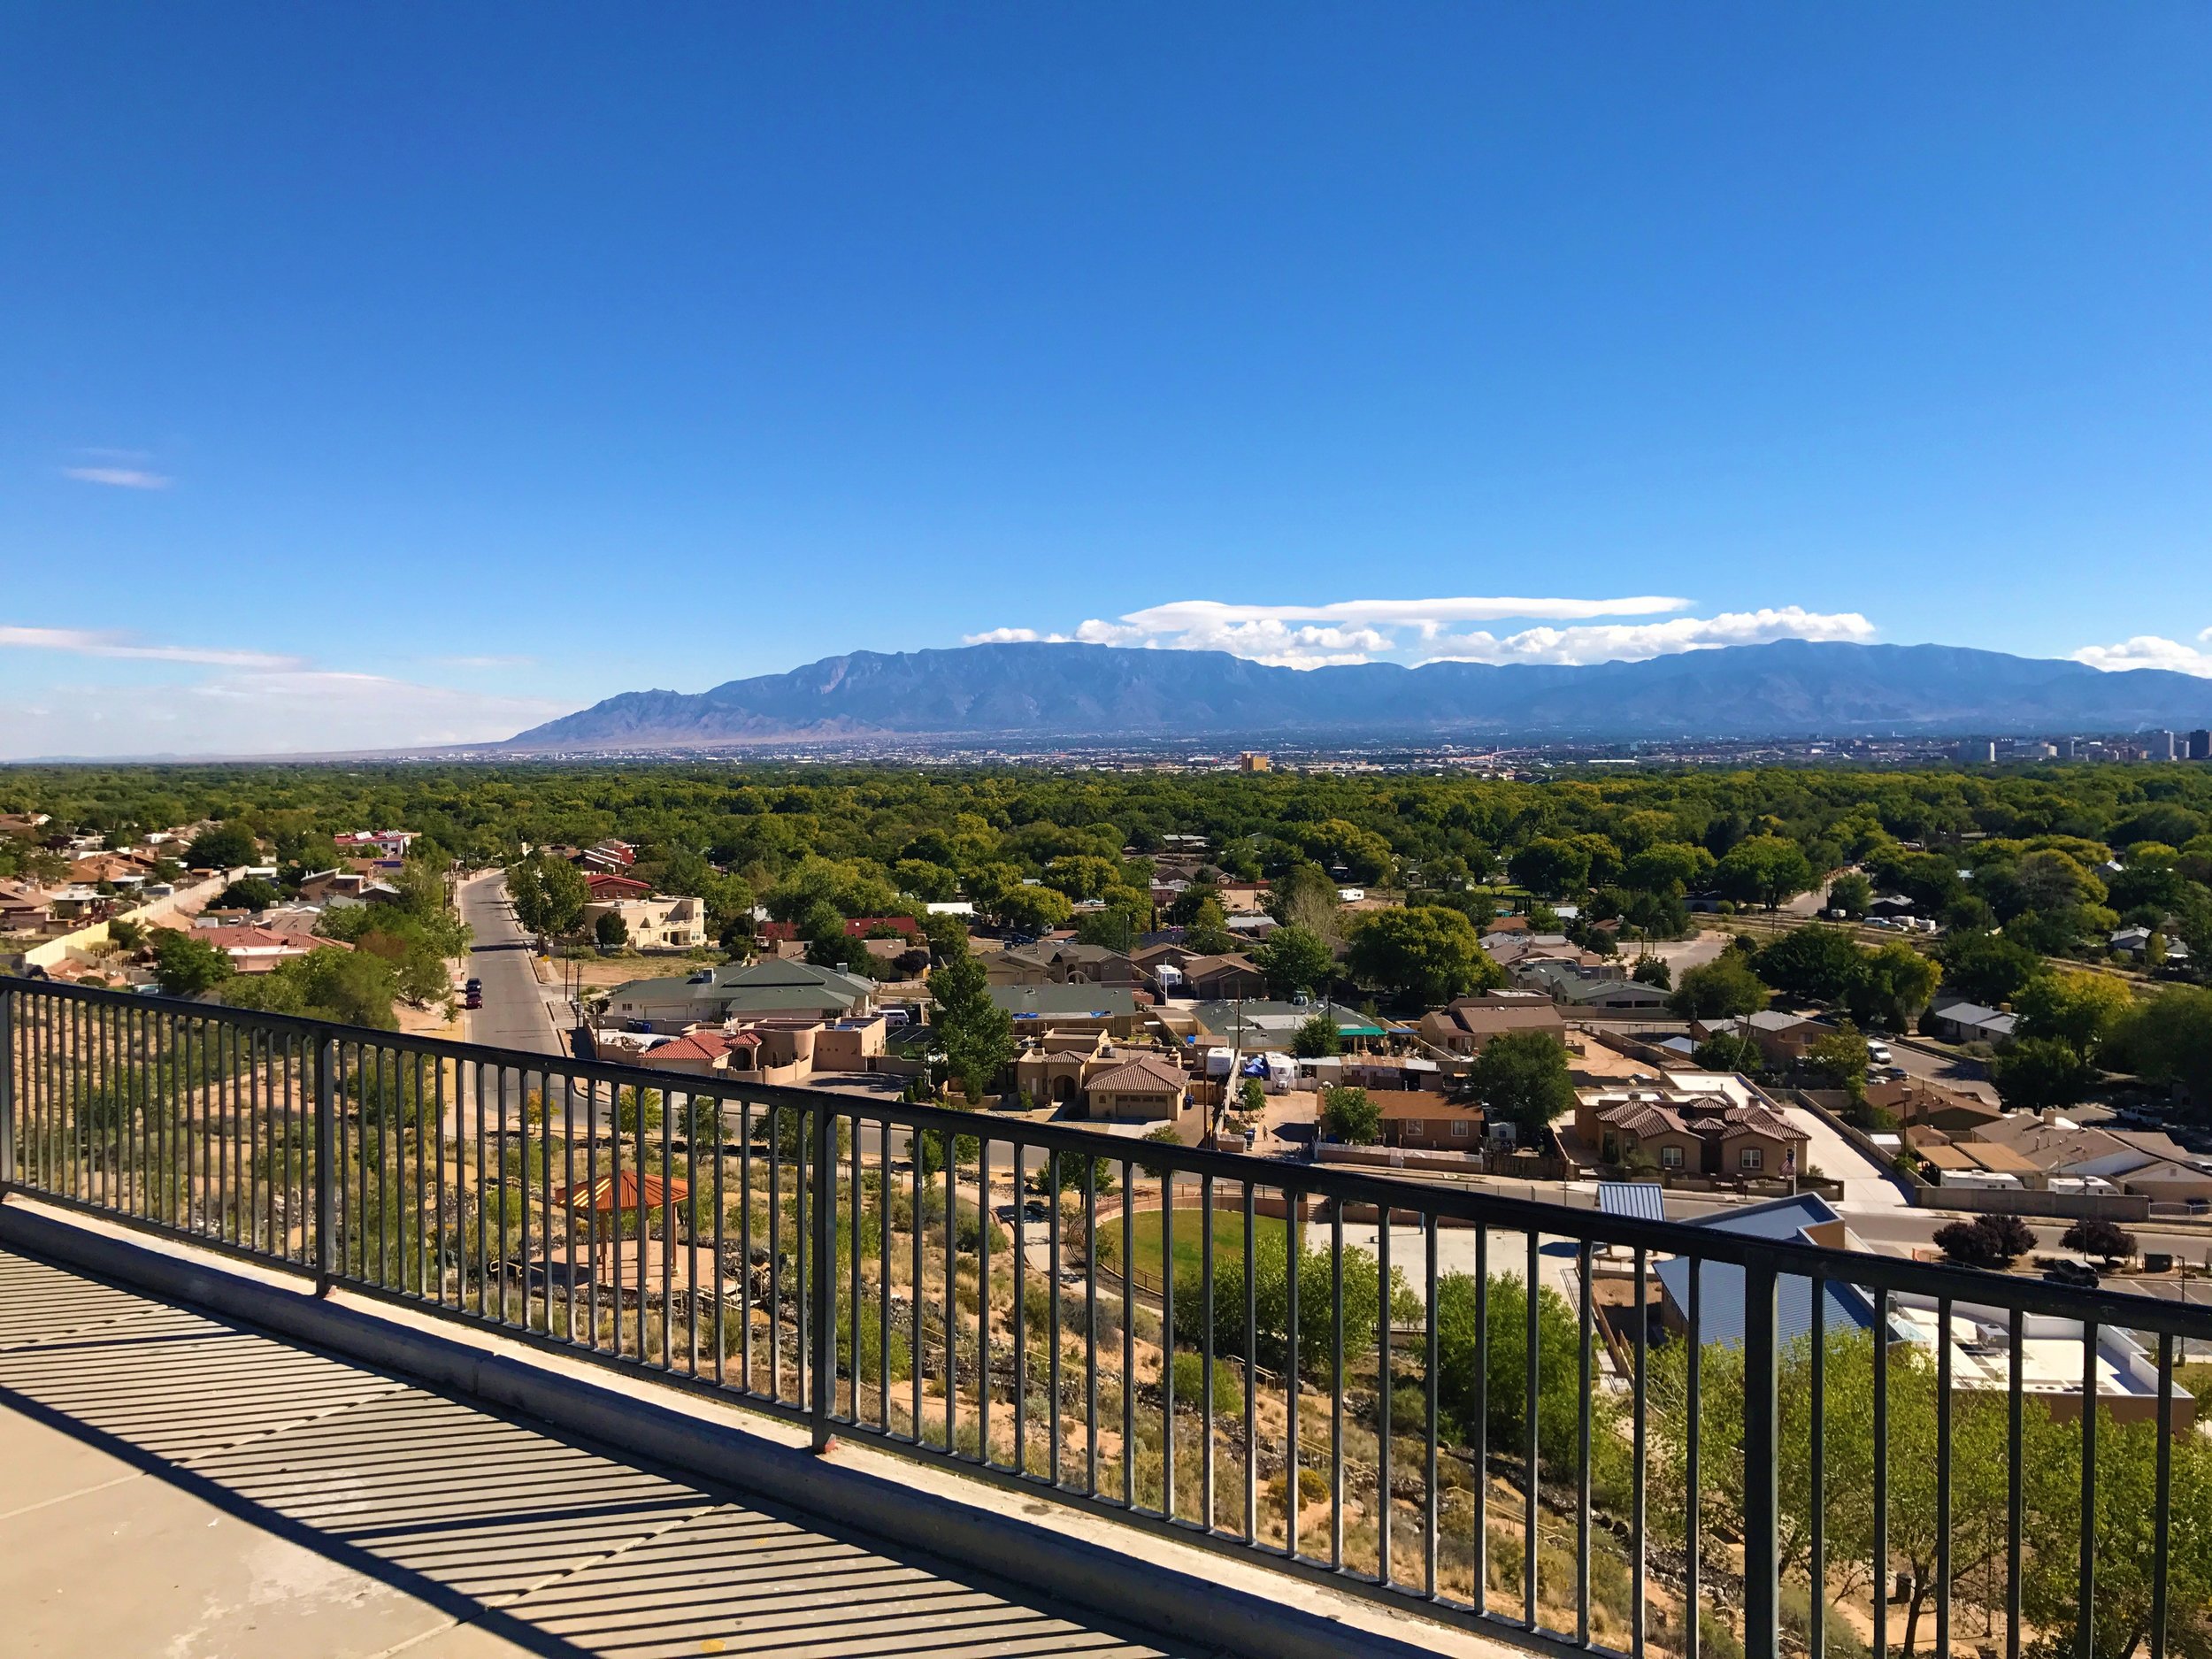 View of Albuquerque and Sandia Peak Mountains